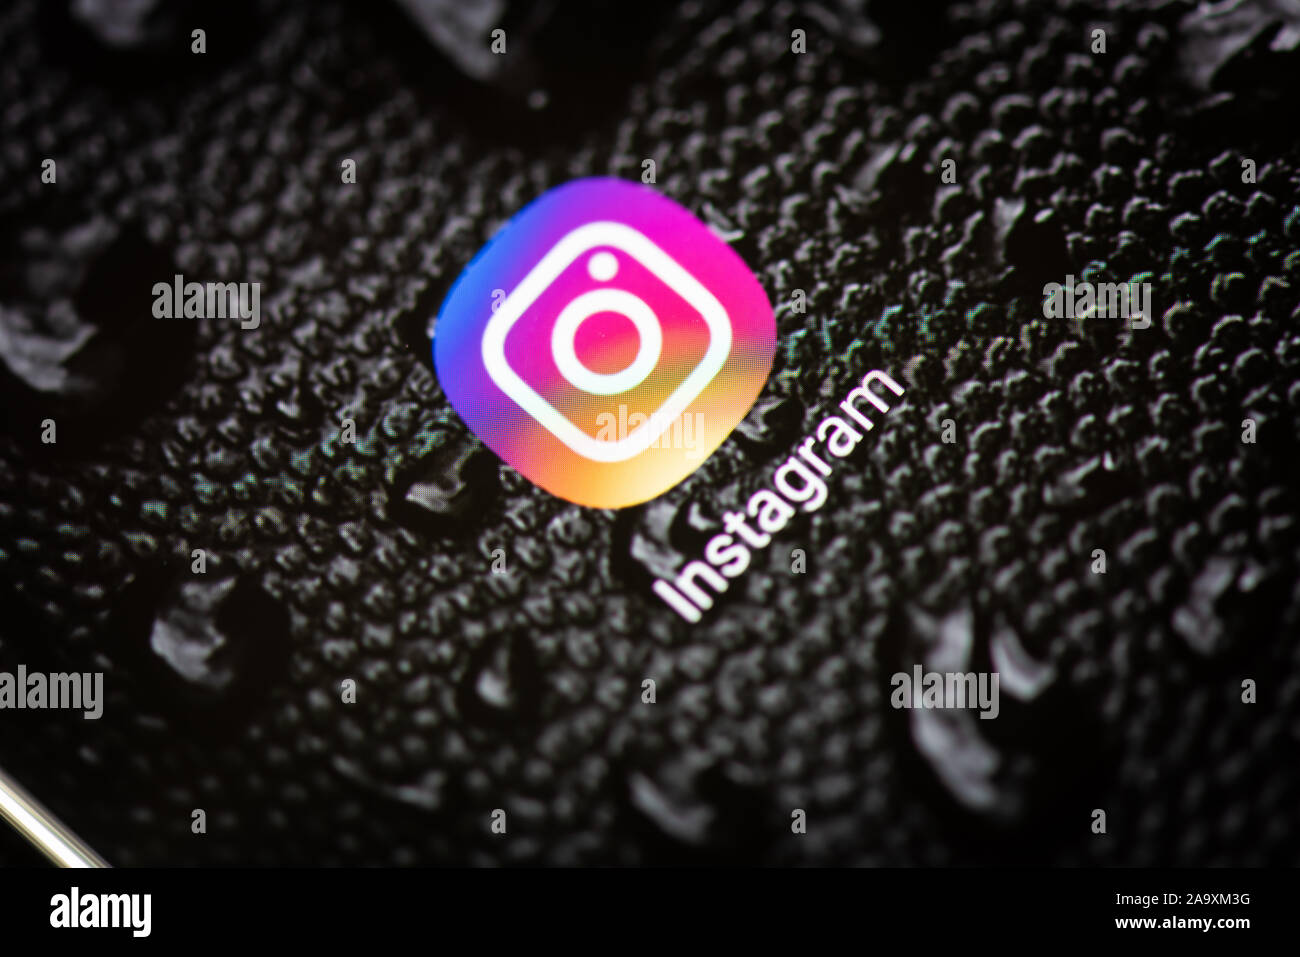 Instagram Logo Black Background Jpg